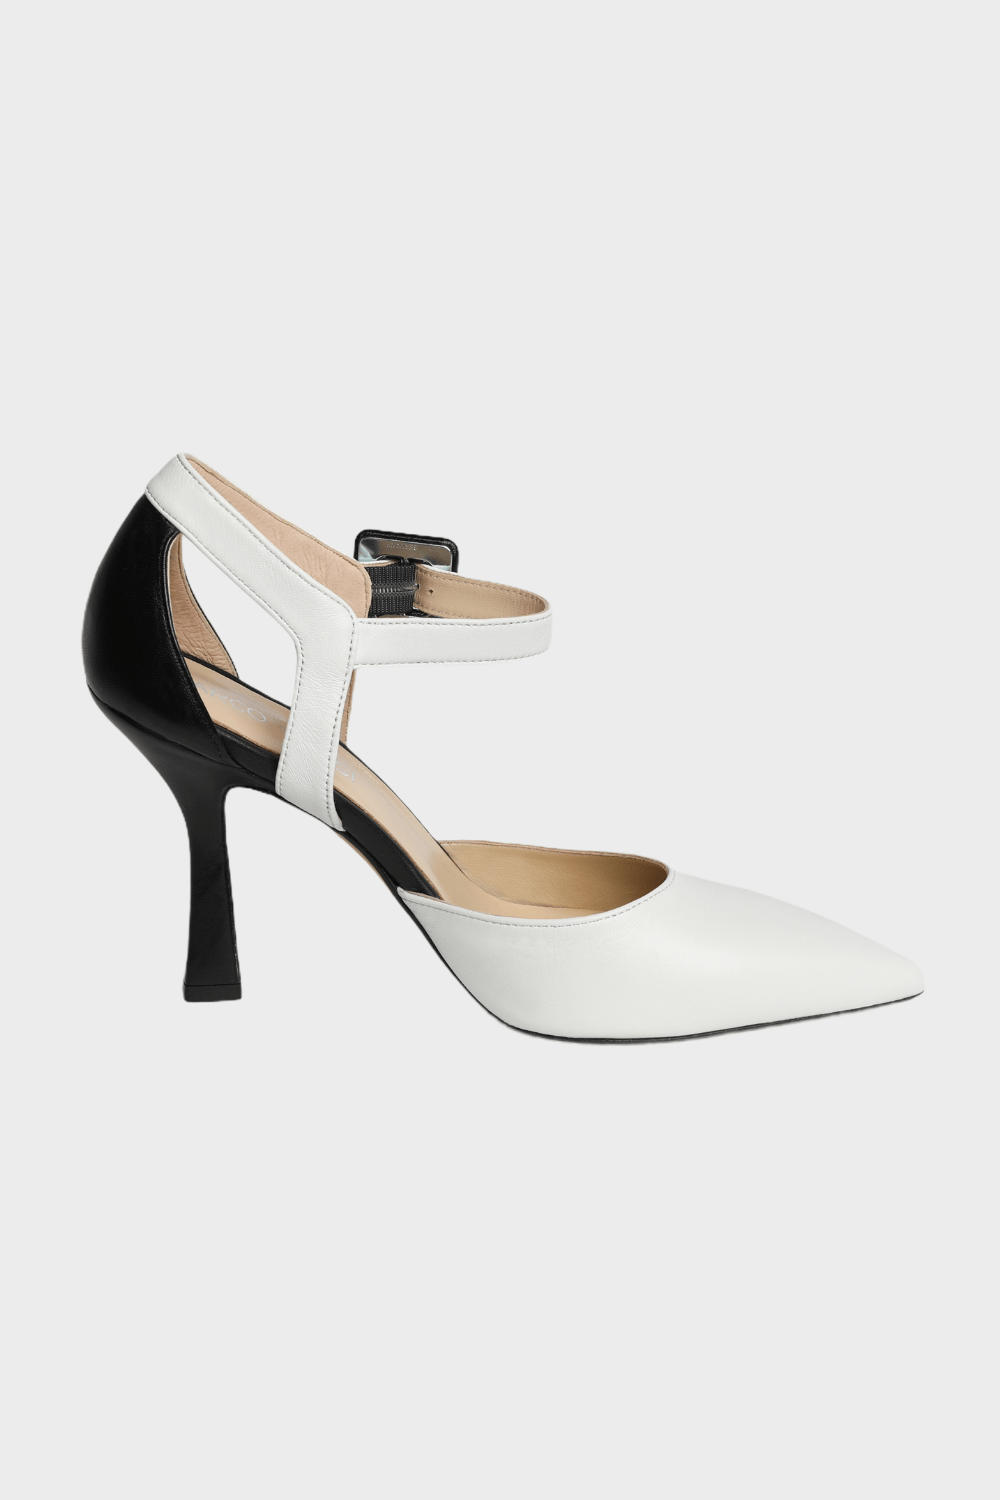 golden-ankle-strap-kitten-heels - Luis Onofre design shoes